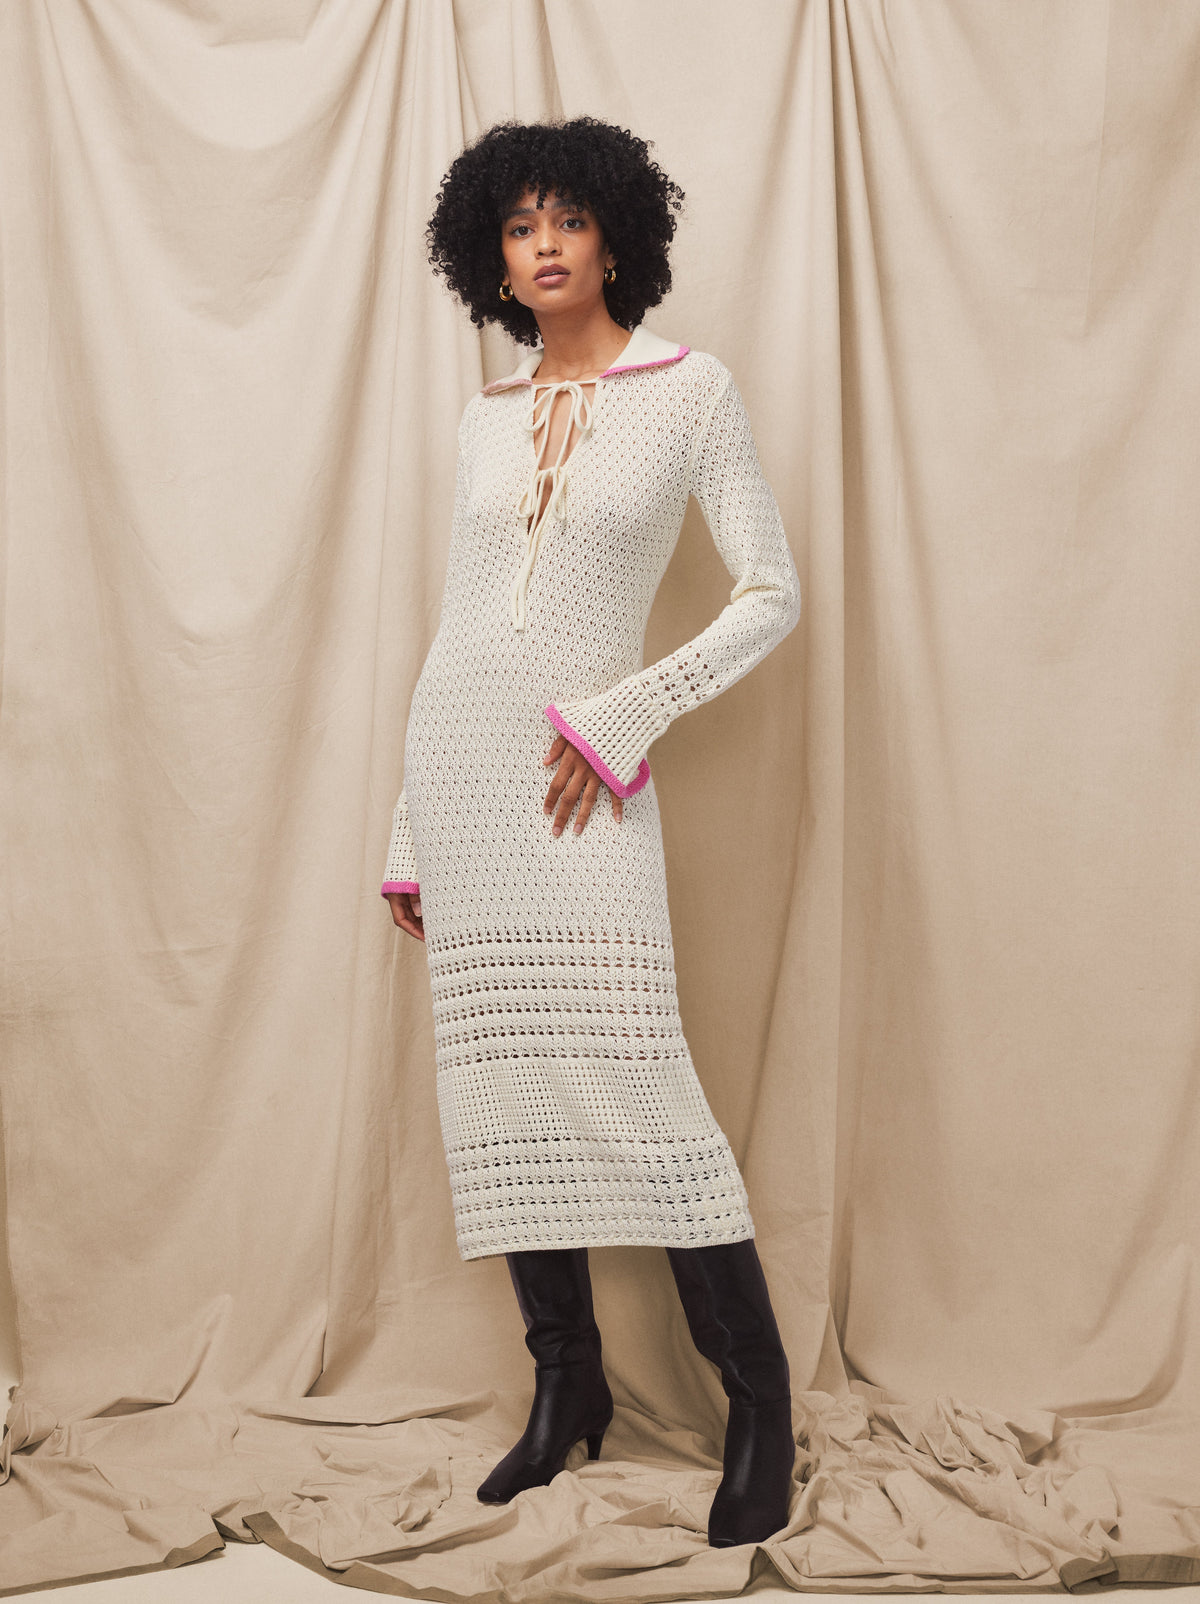 Delilah Ivory Crochet Knit Dress By KITRI Studio